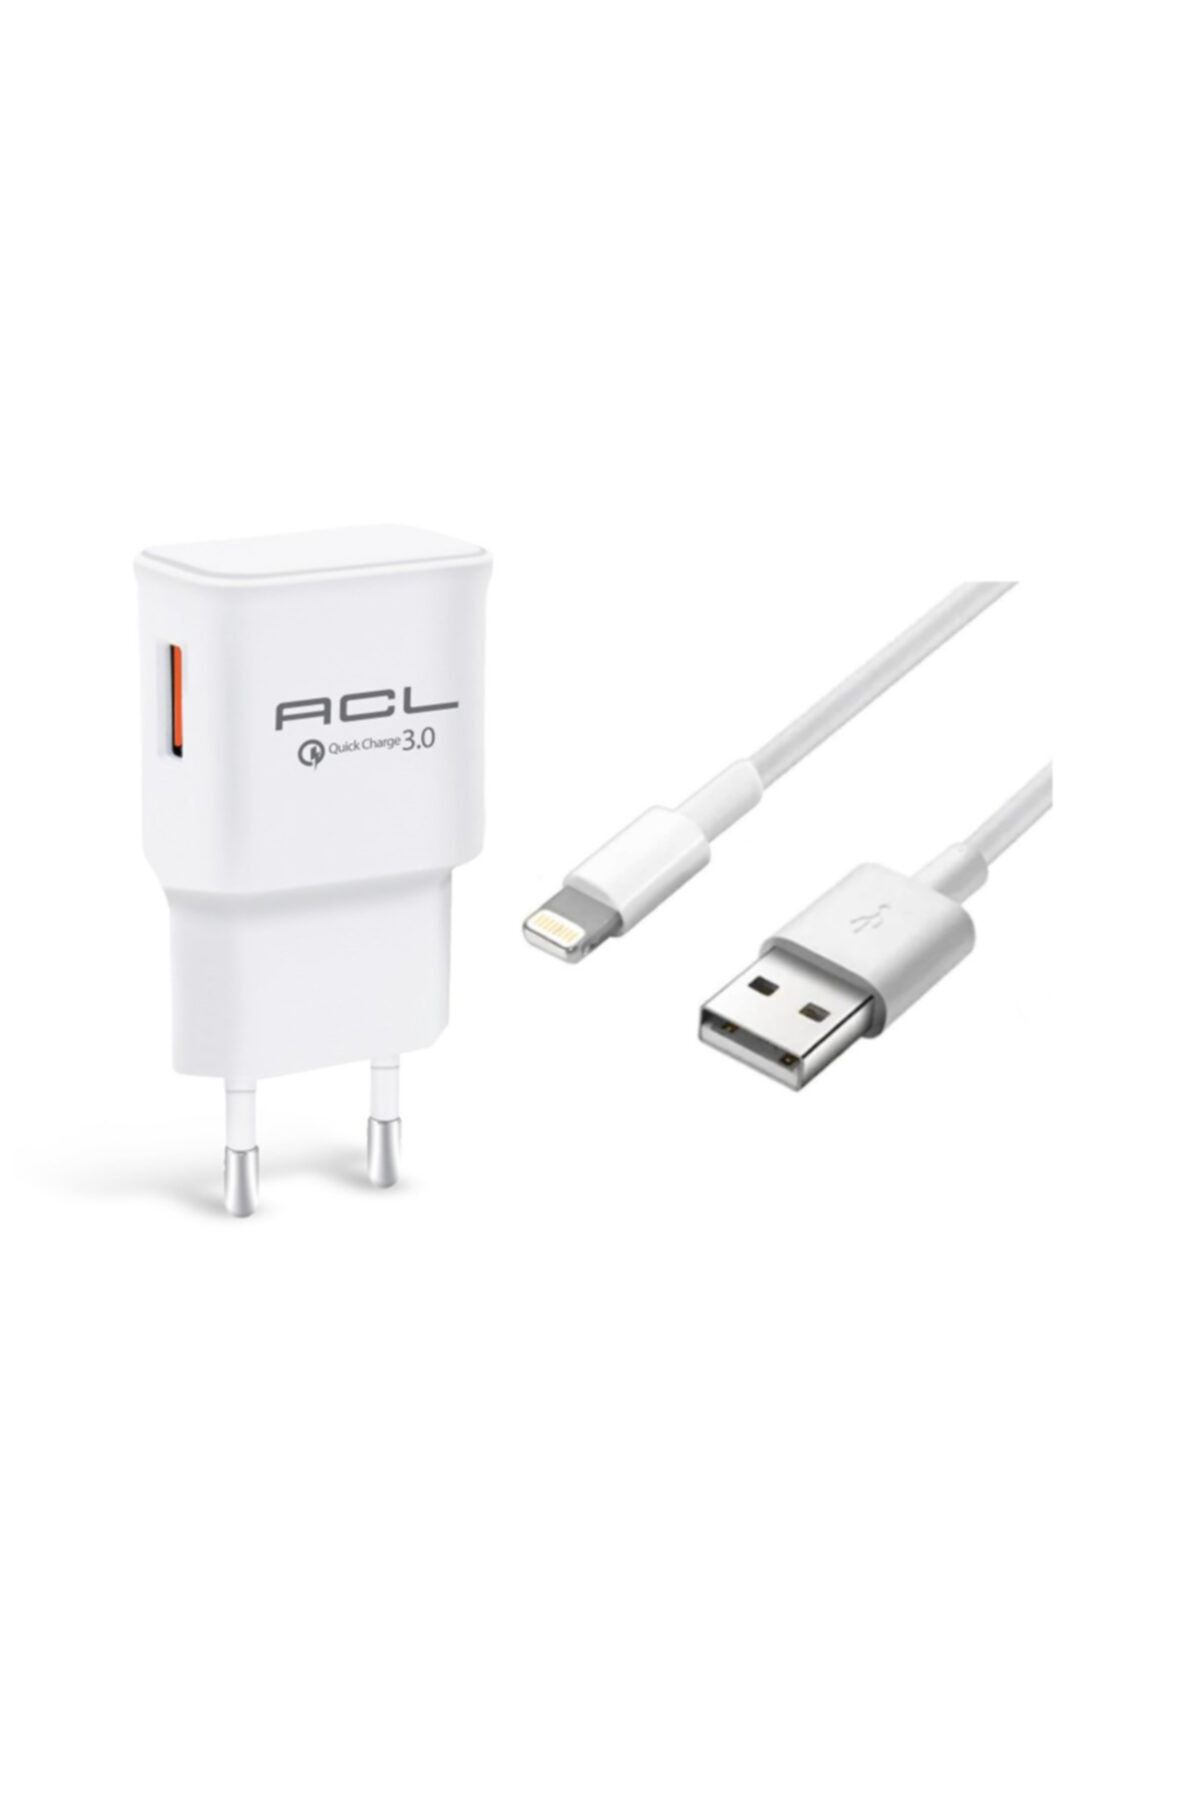 ACL MOBILE PHONE ACCESSORIES Powerclassic™ Quick Charge Hızlı Şarj 3.0 Duvar Şarj Aleti Lightning Usb Kablo Set Yg-set-al